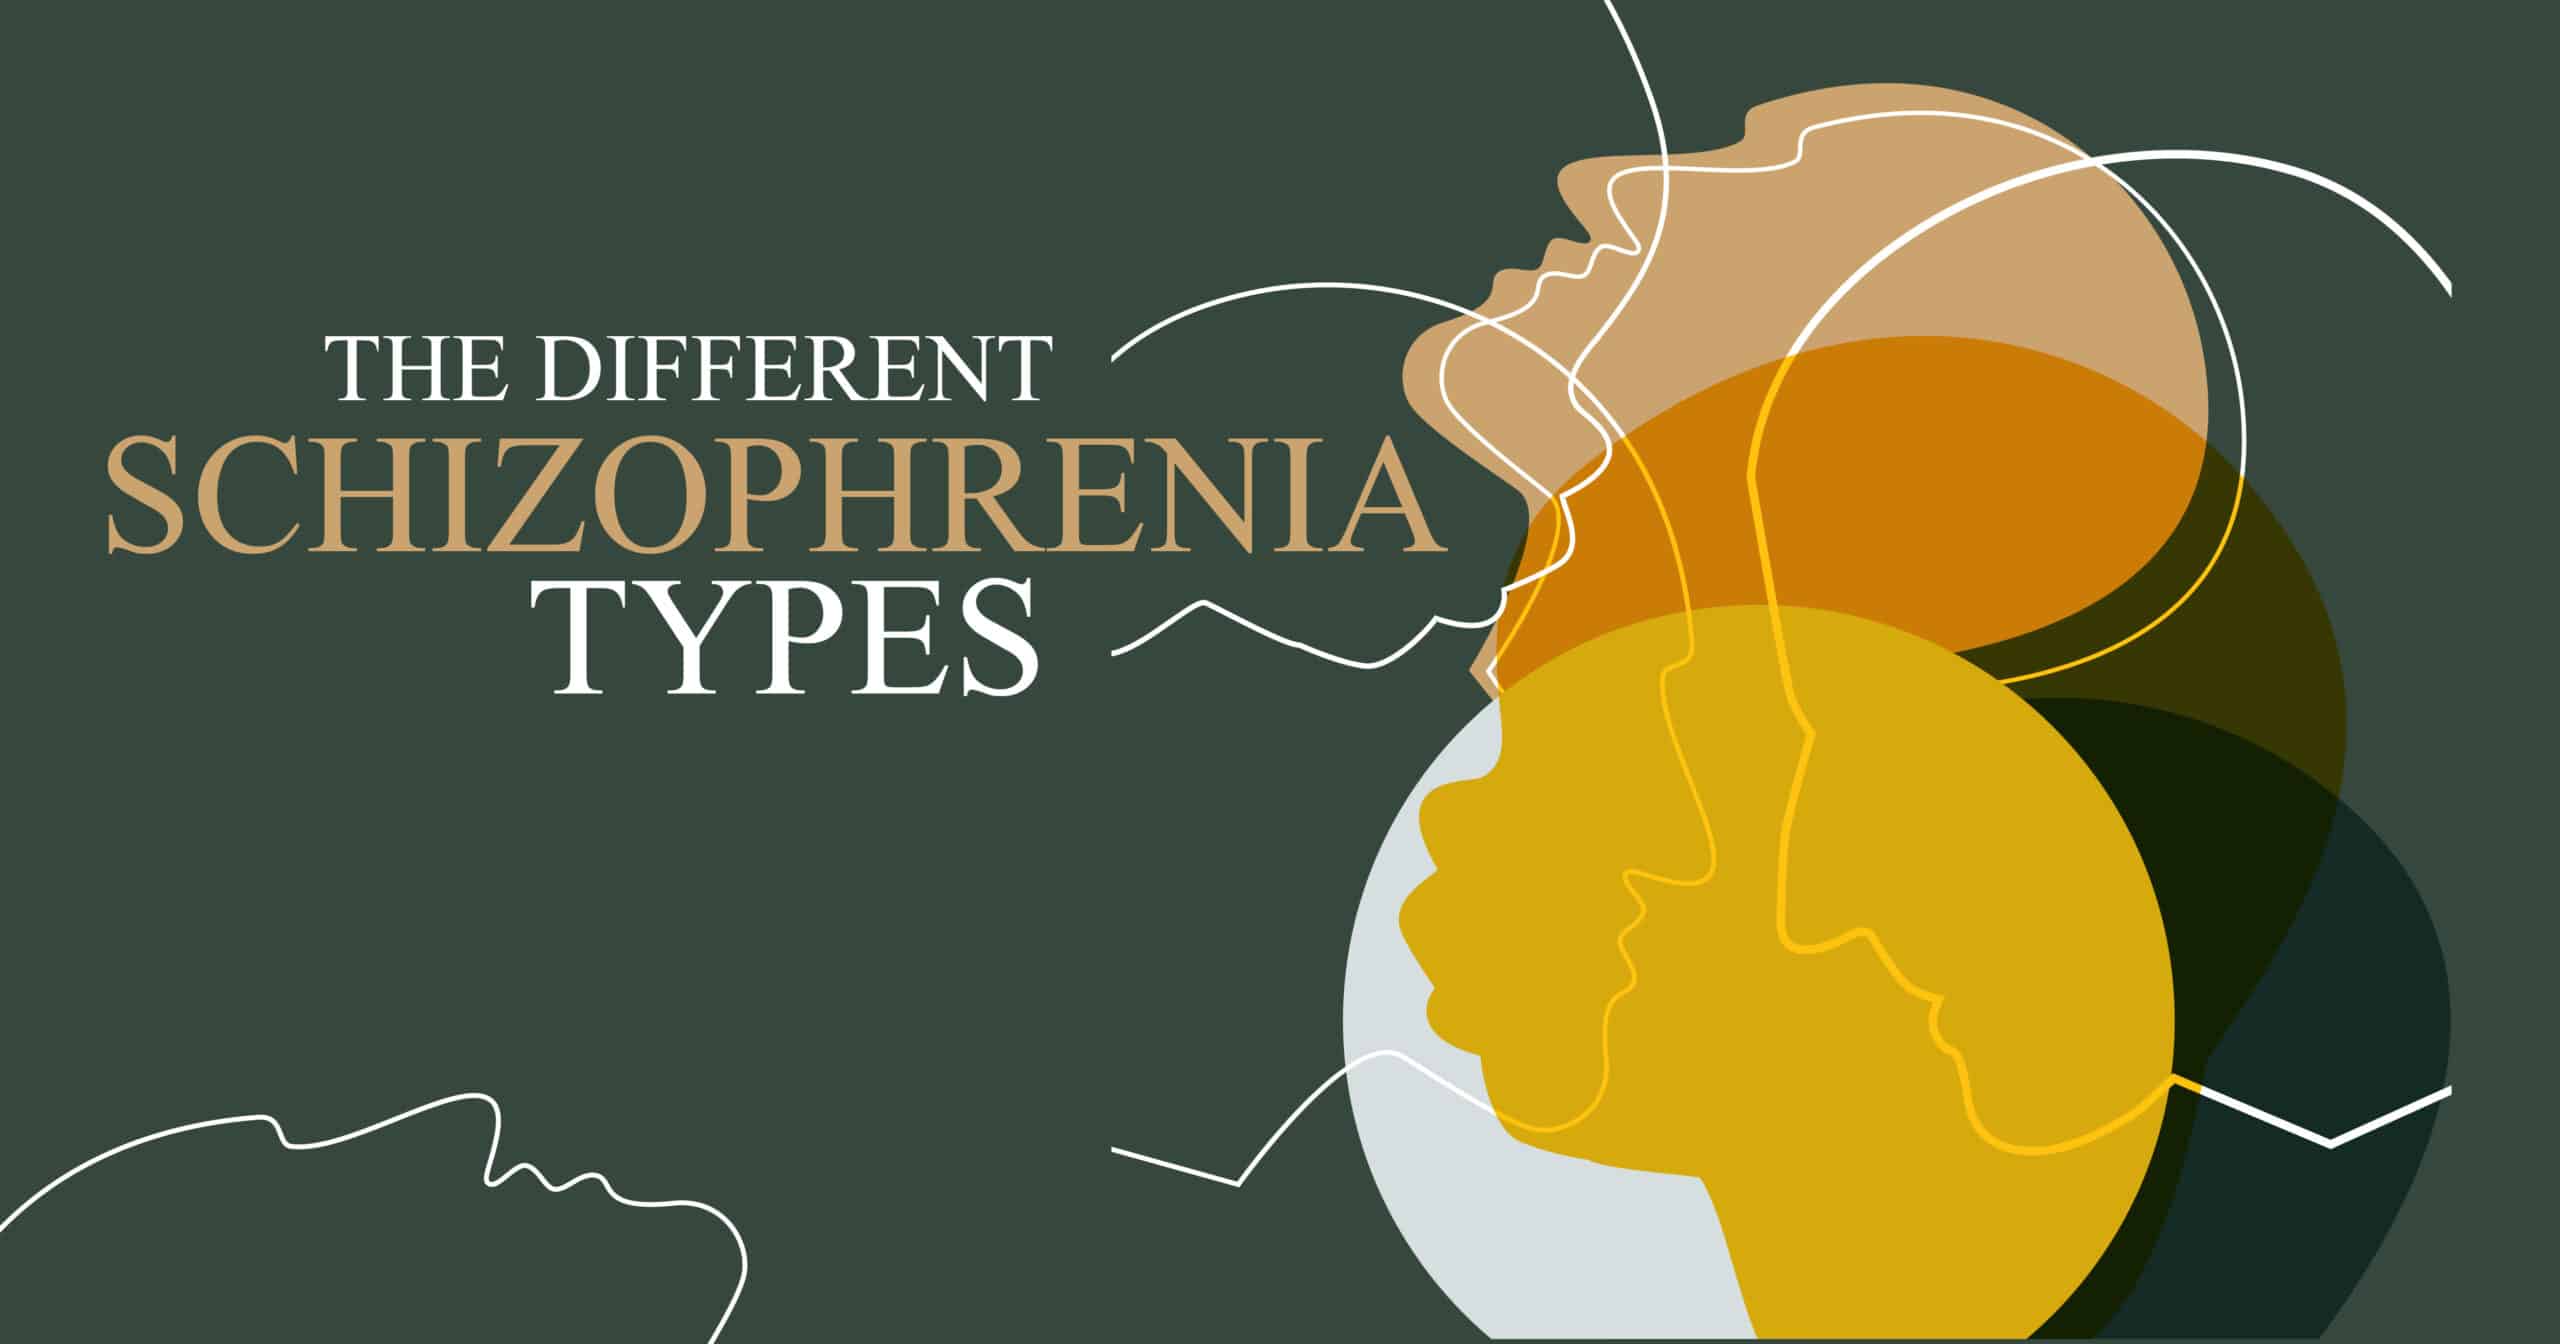 Types of Schizophrenia